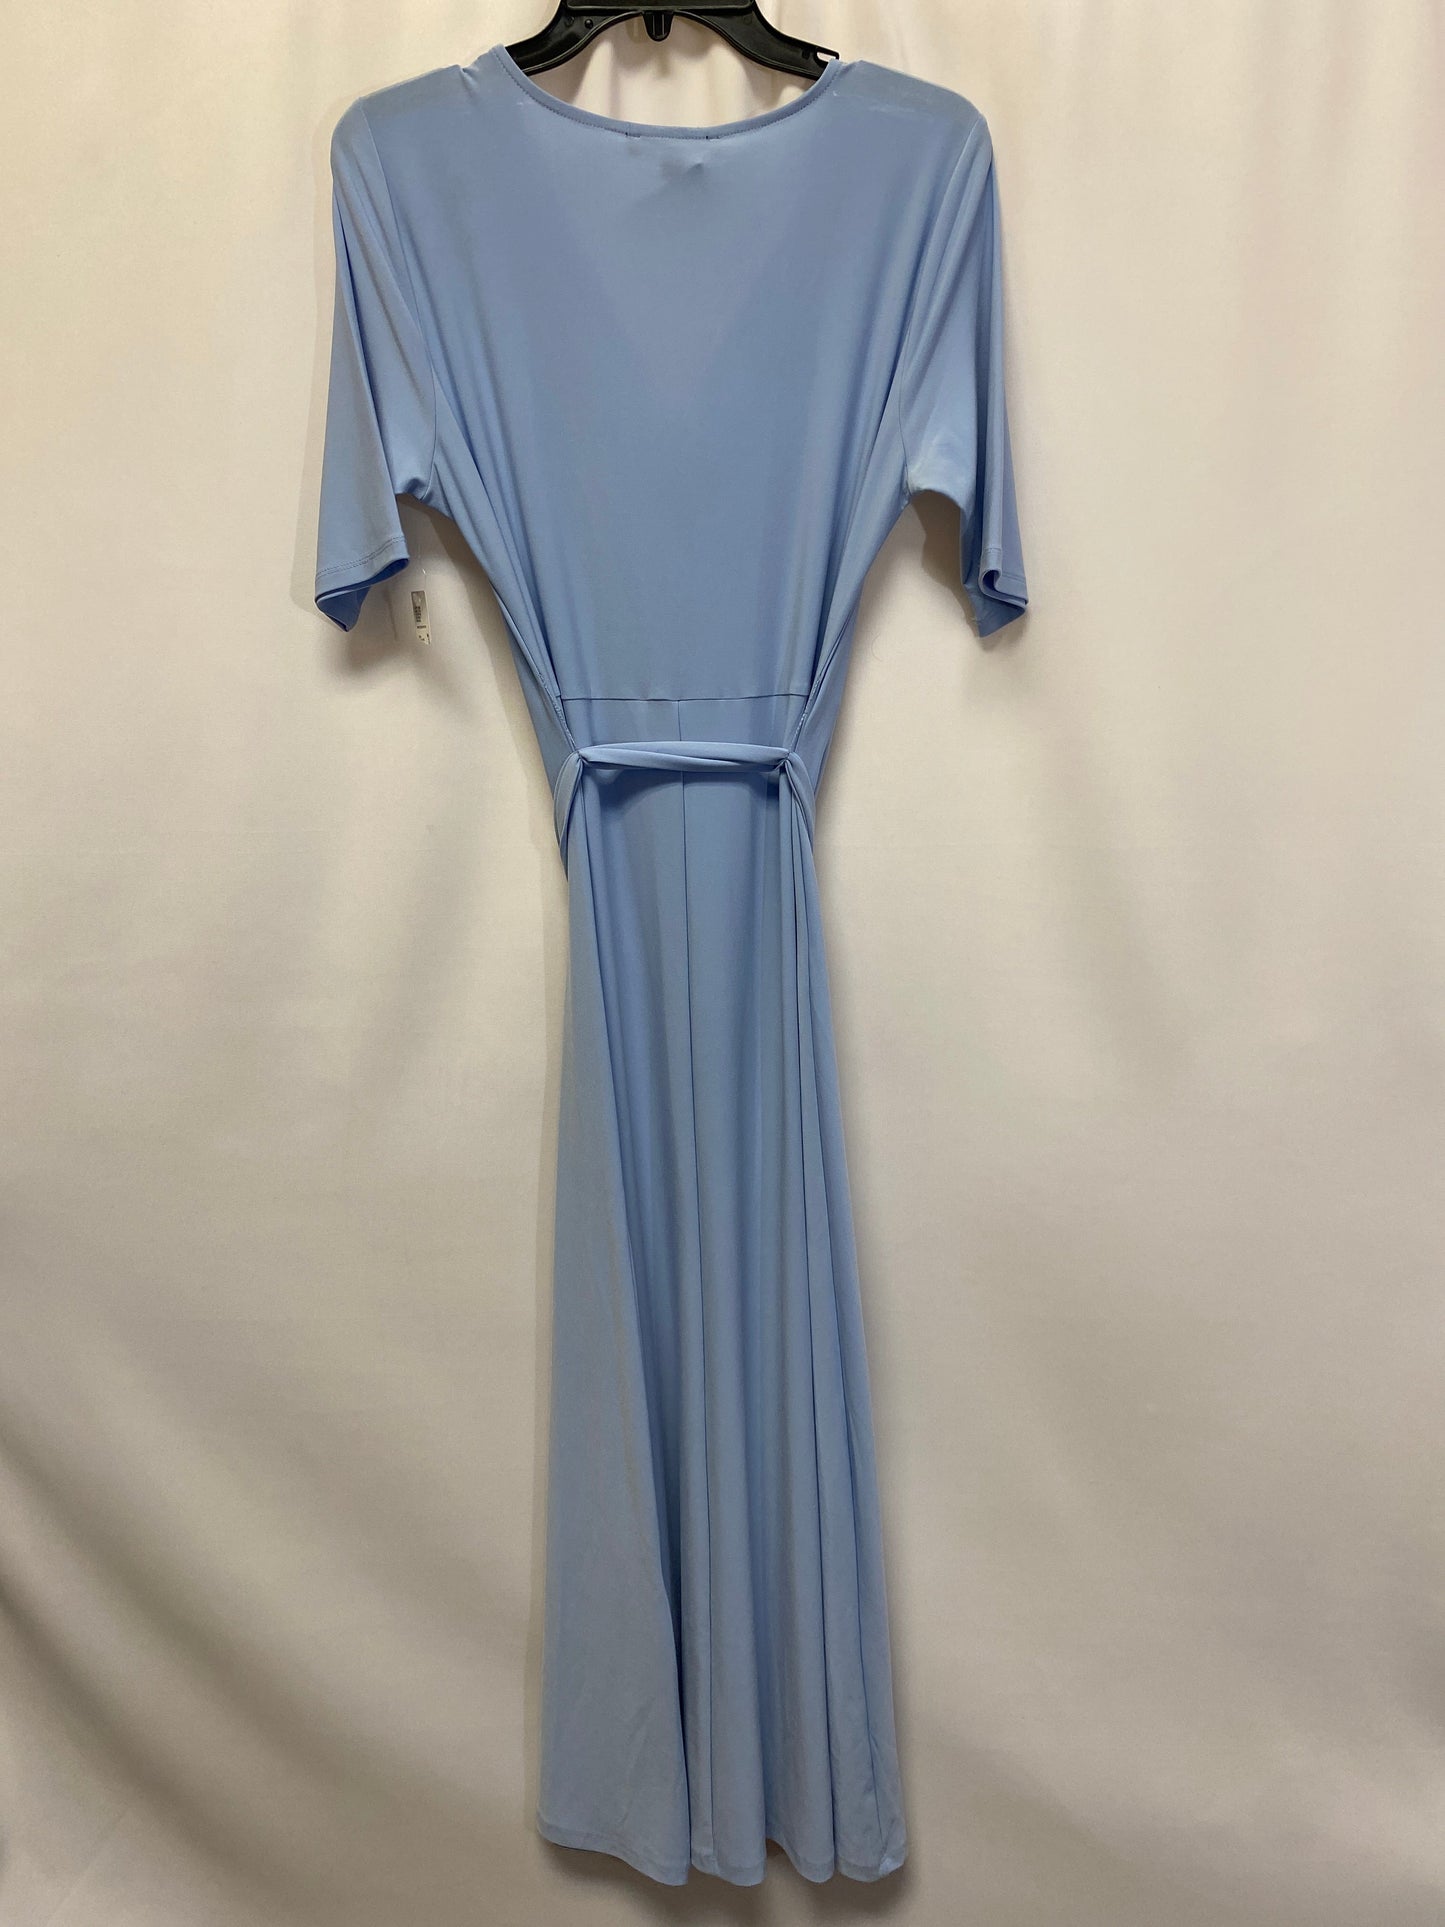 Blue Dress Casual Maxi Preston And New York, Size M